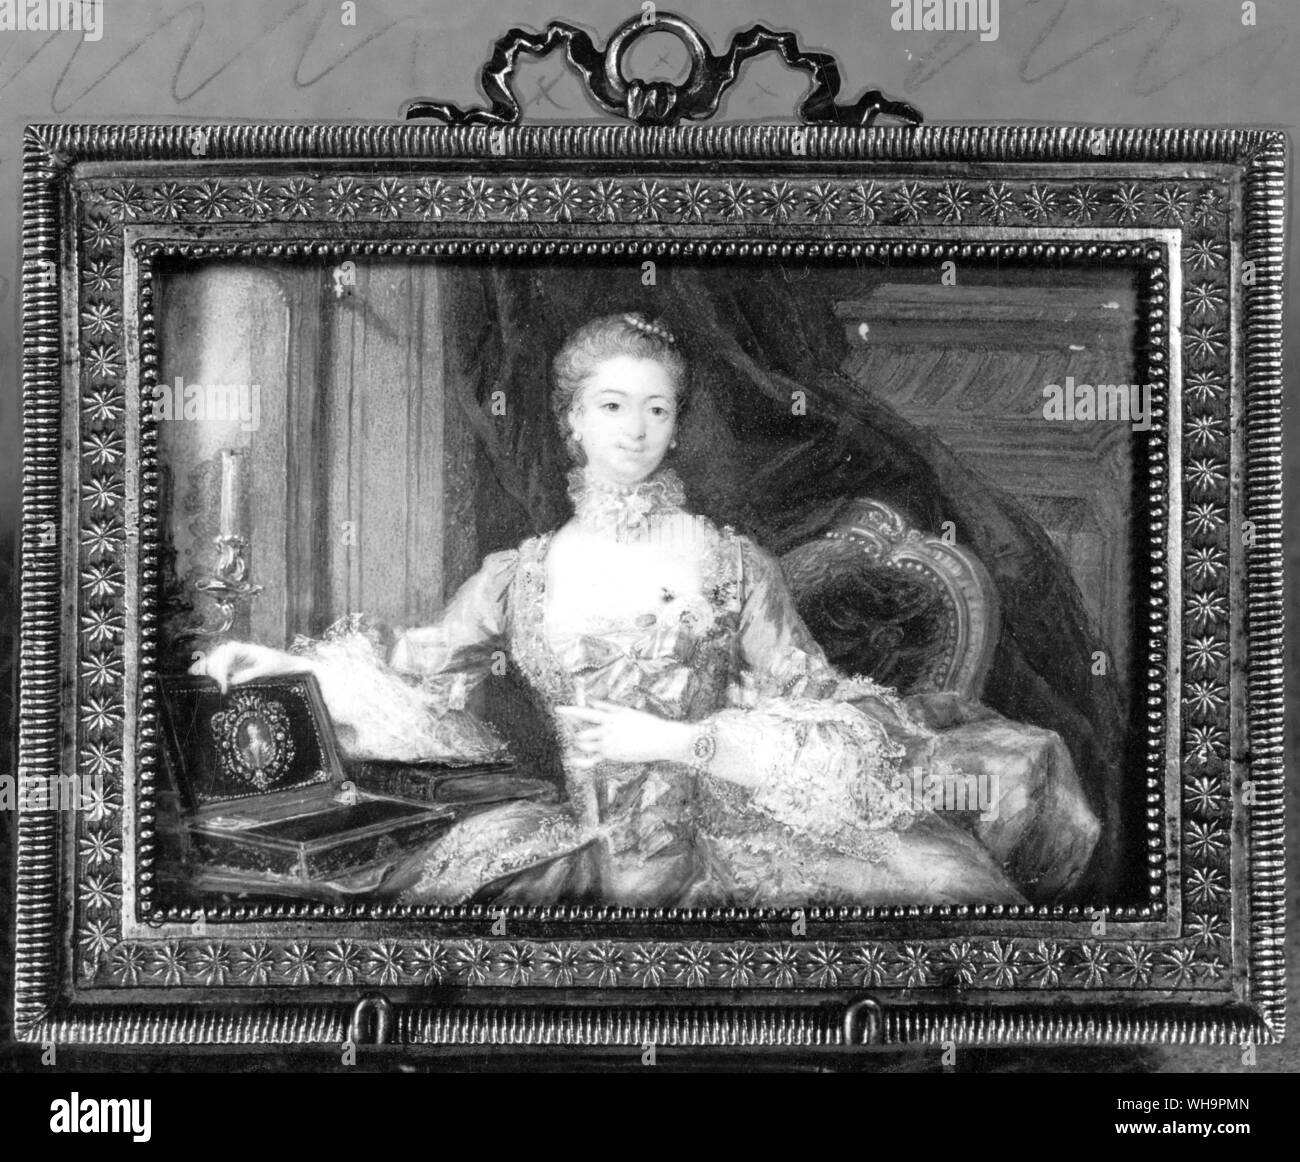 Miniature self-portrait of Madame de Pompadour, 1754. (Photograph also appears in colour in the book) Stock Photo